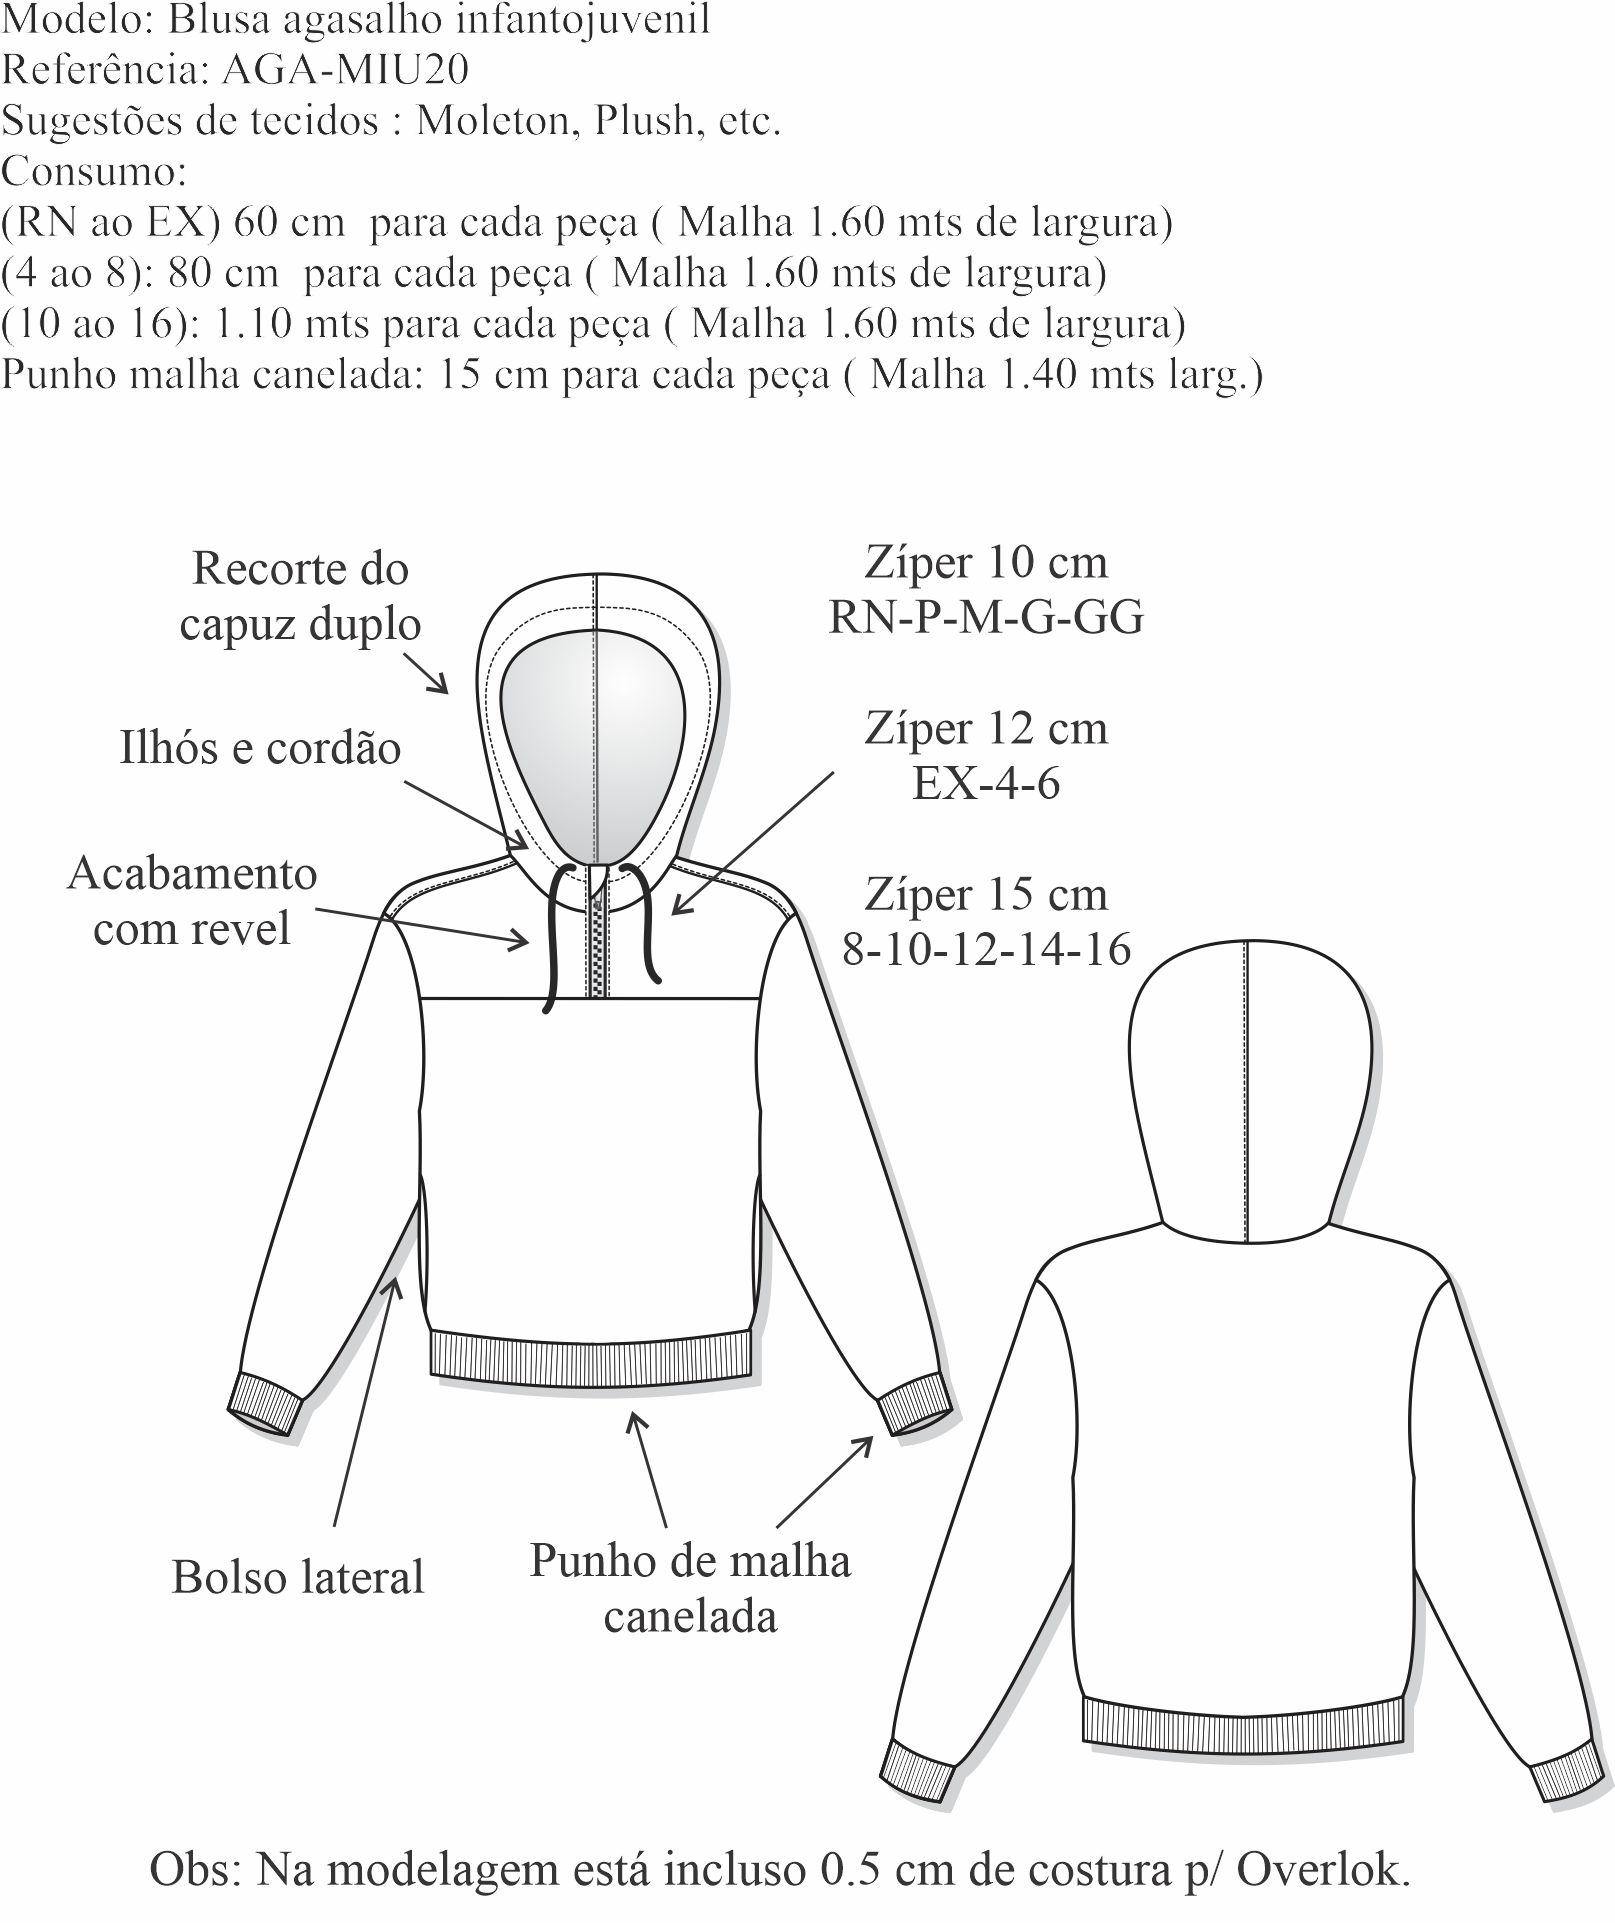 Blusa agasalho infantojuvenil (AGA-MIU20) - Foto 1